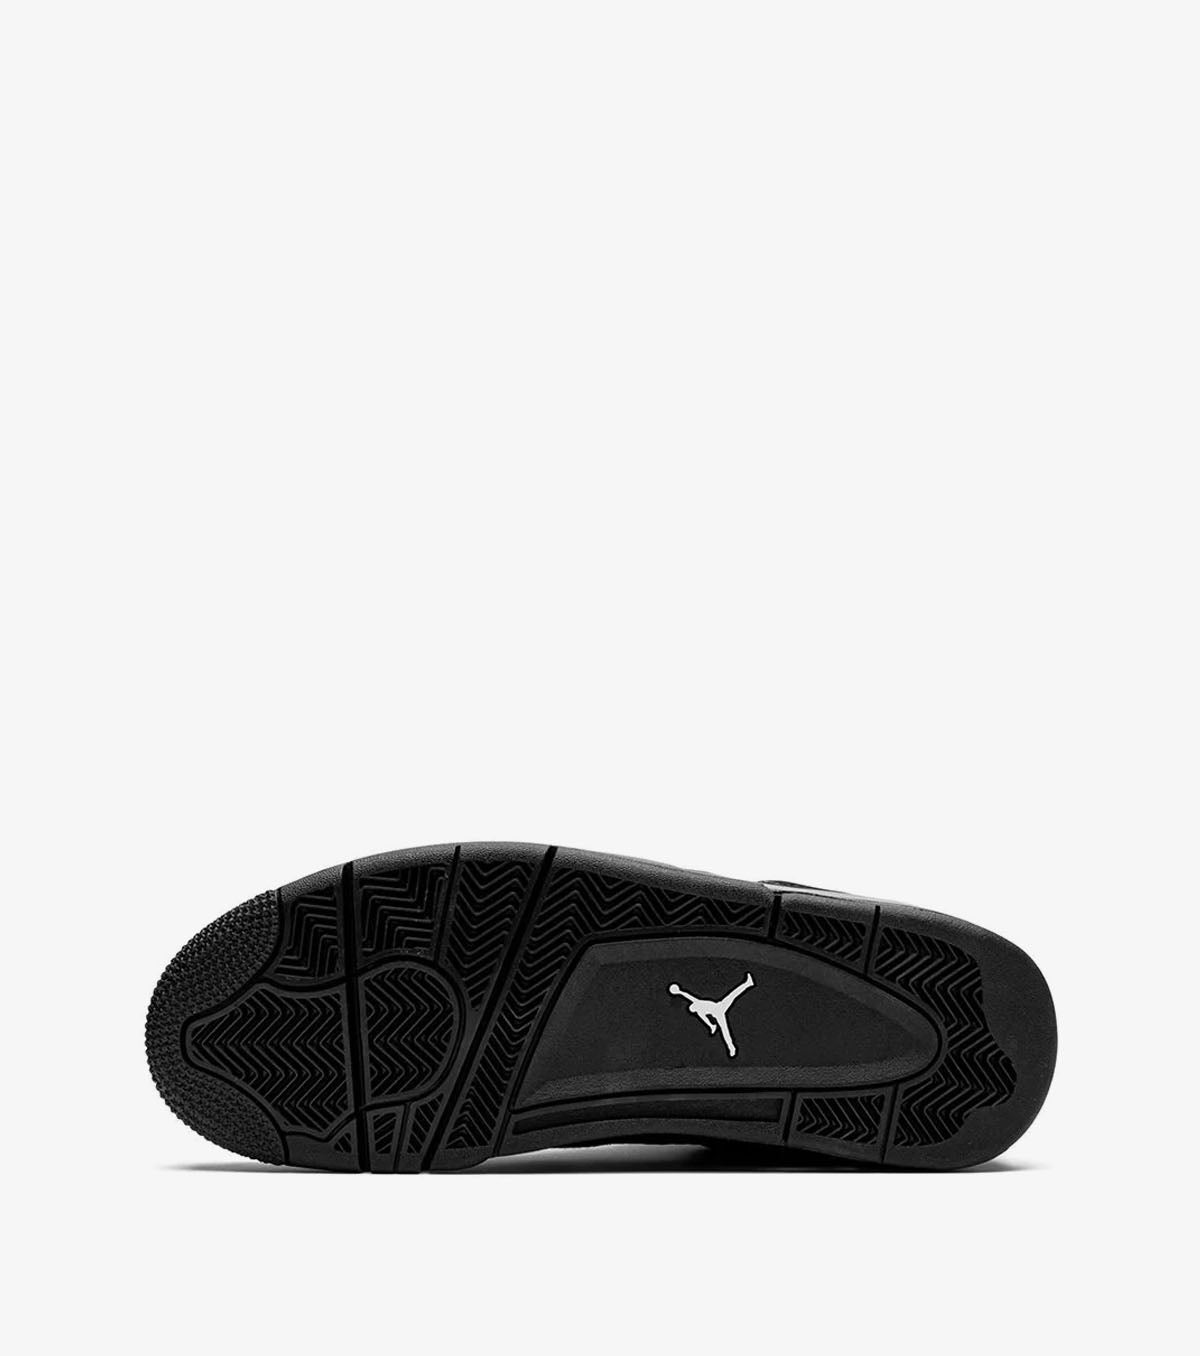 Air Jordan 4 Retro Chat Noir 2020